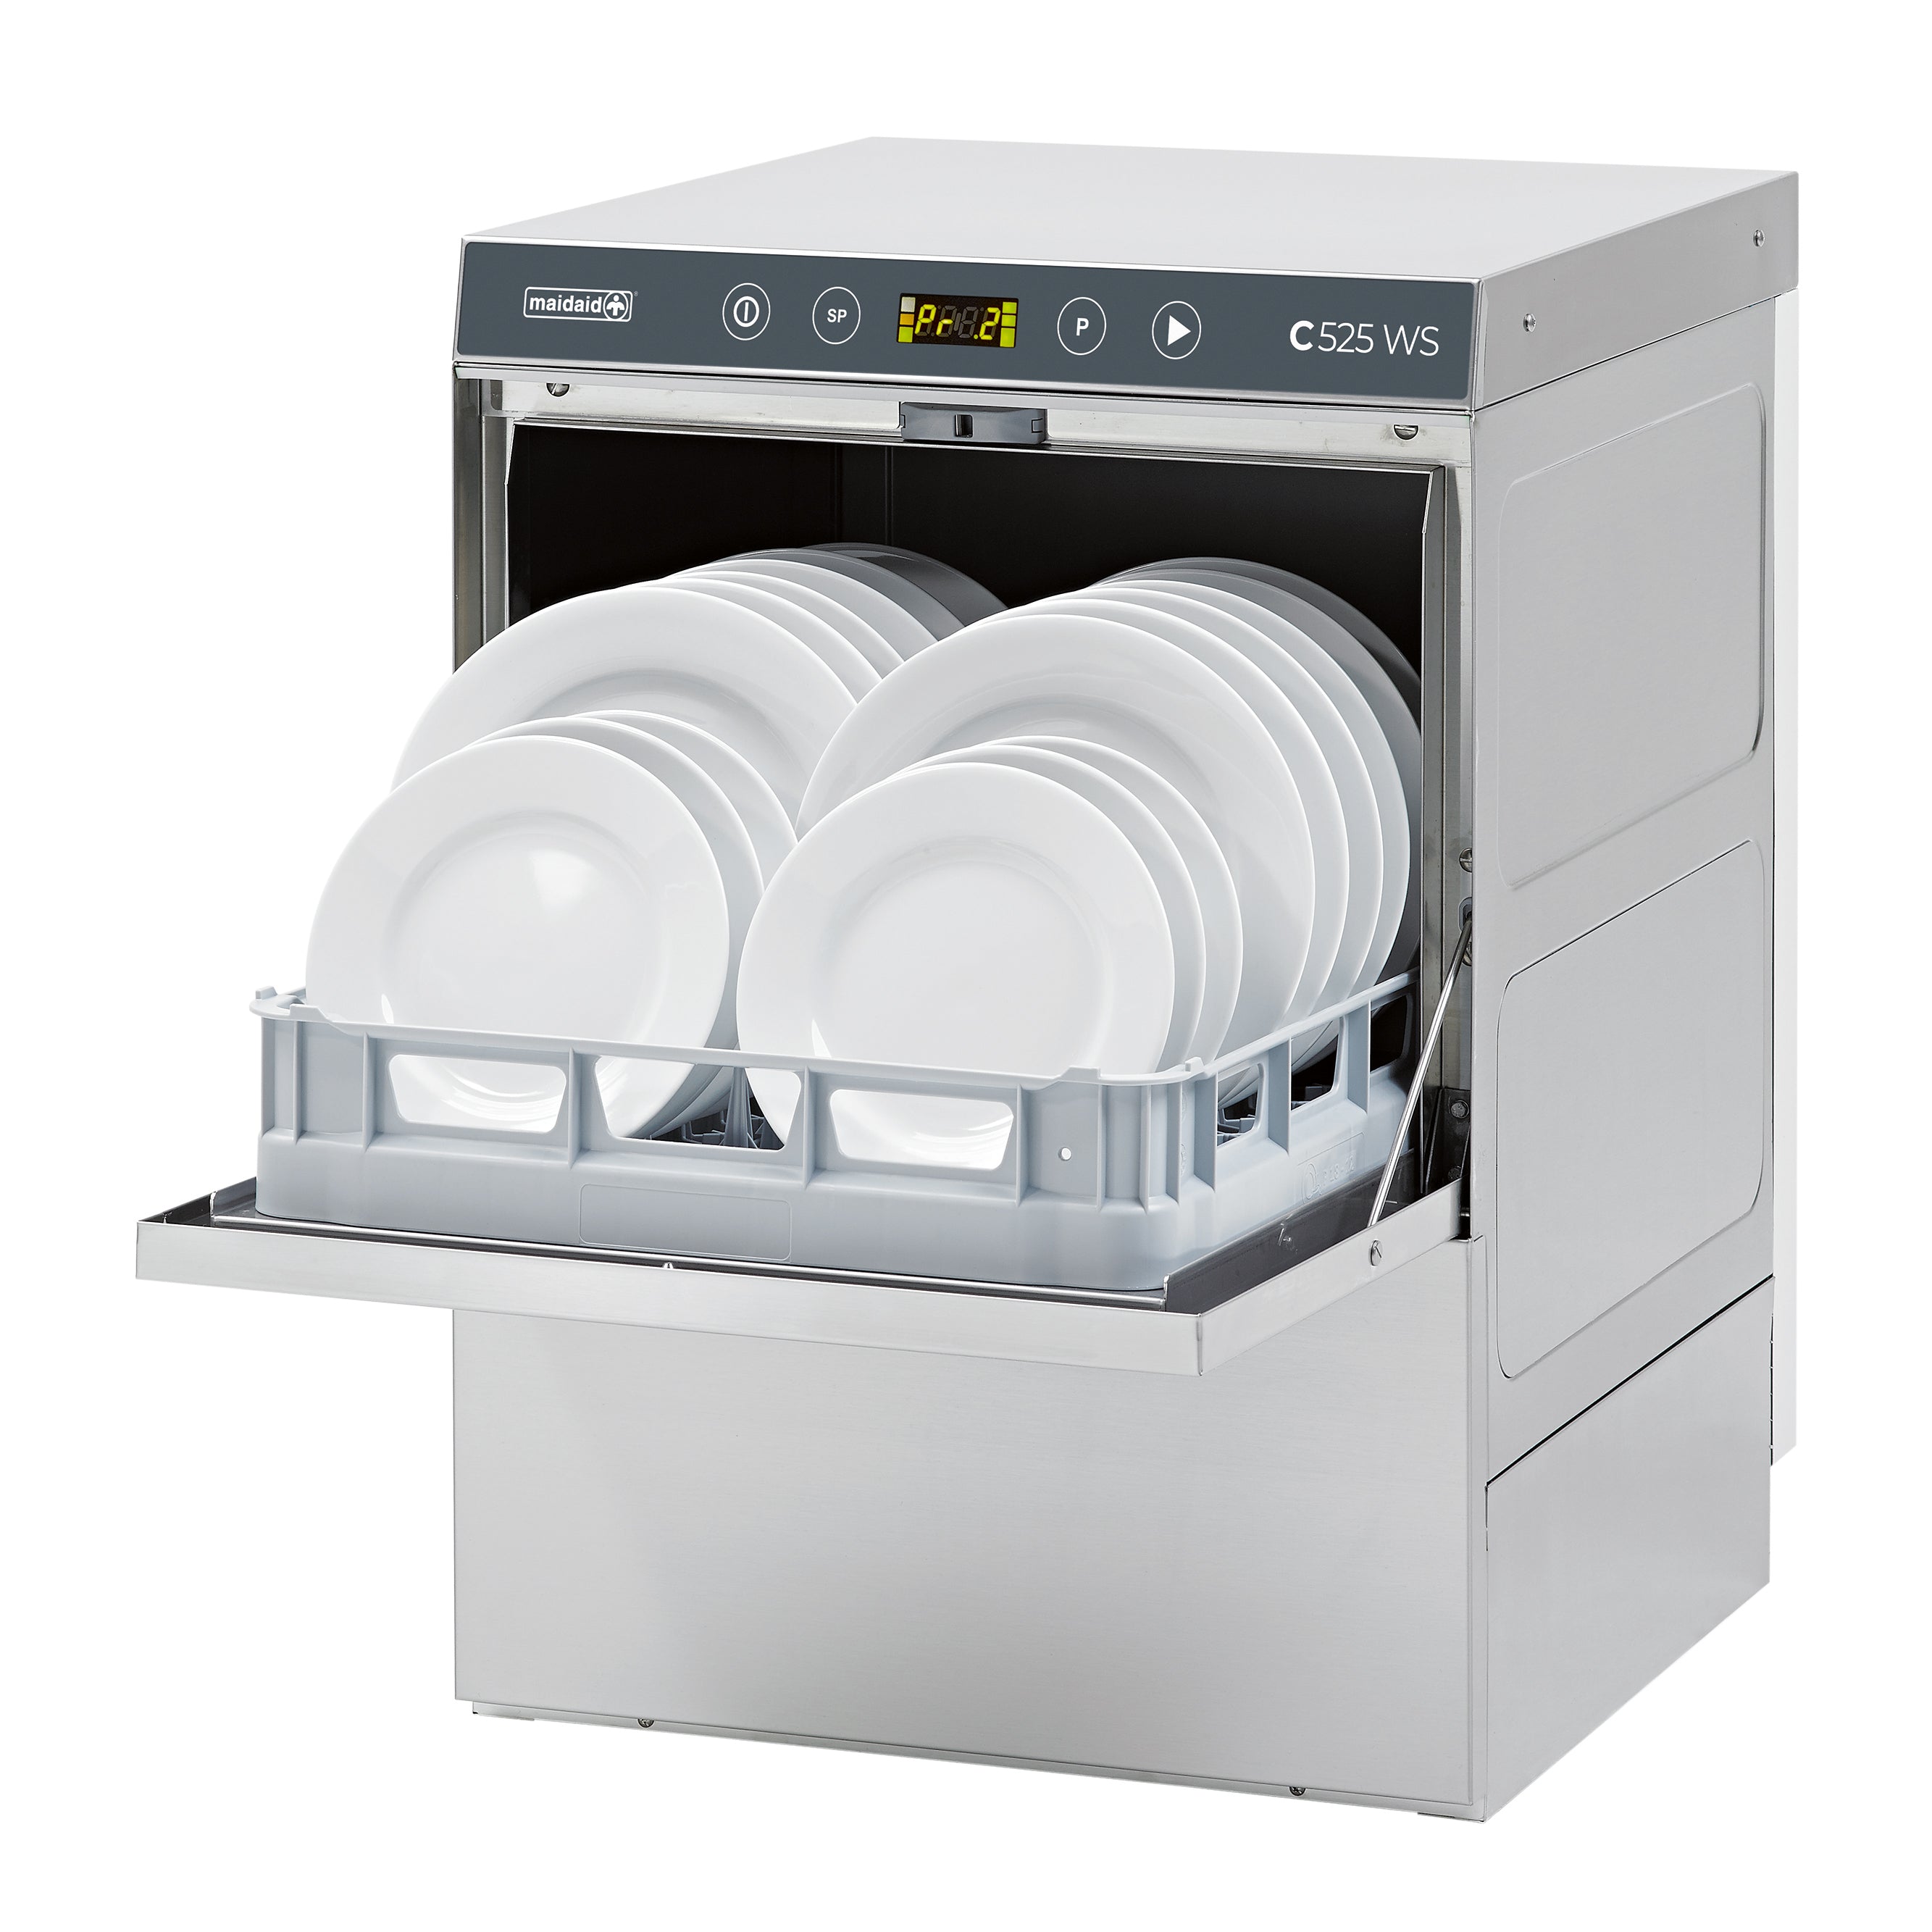 Maidaid C525WS Dishwasher JD Catering Equipment Solutions Ltd